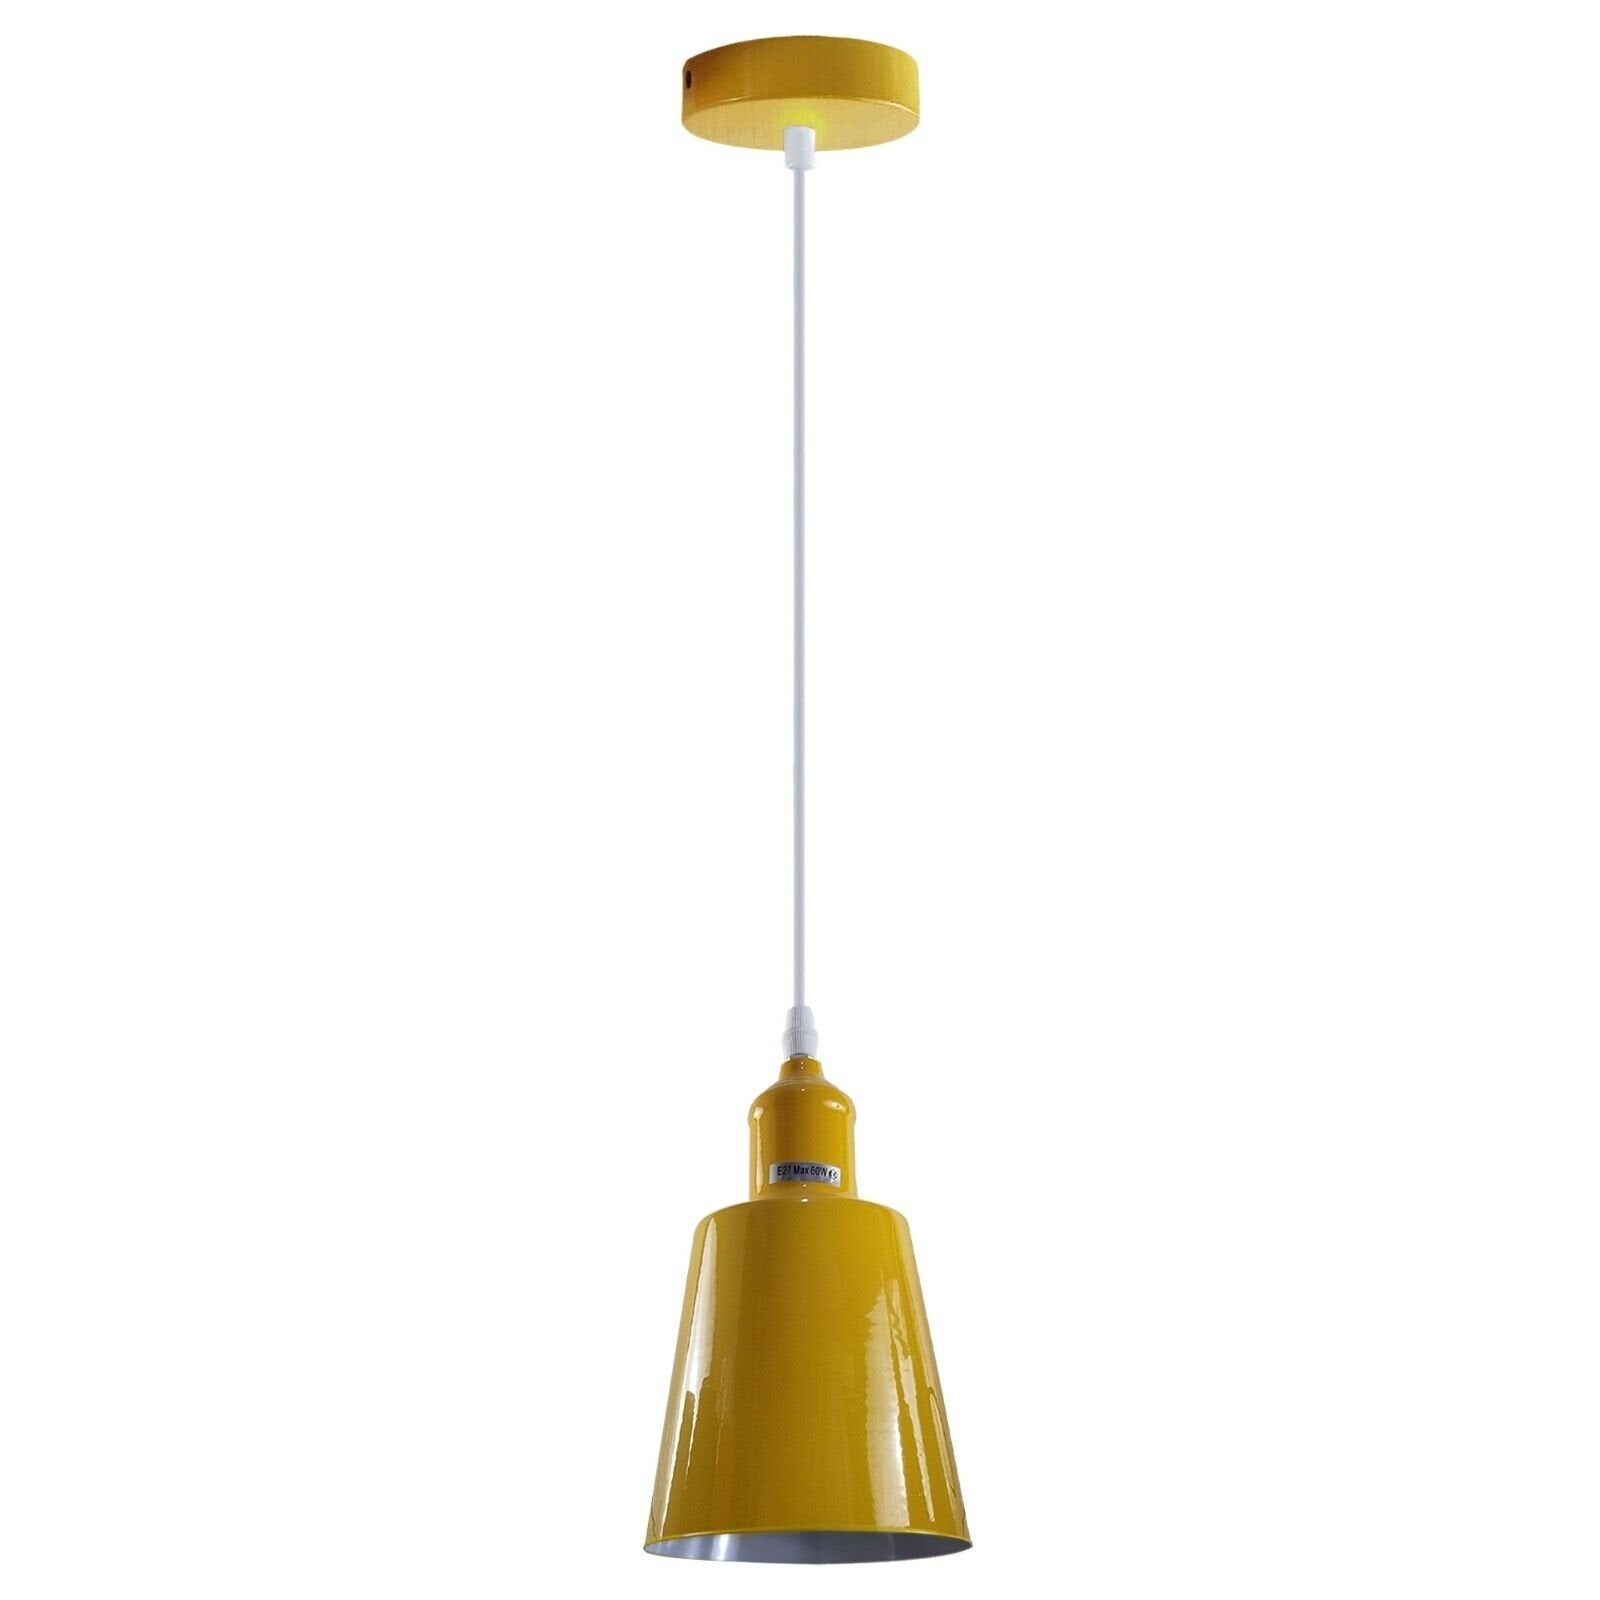 Vintage Industrial Metal Ceiling Lamp Shade Shade Chandelier Retro Pendant Light